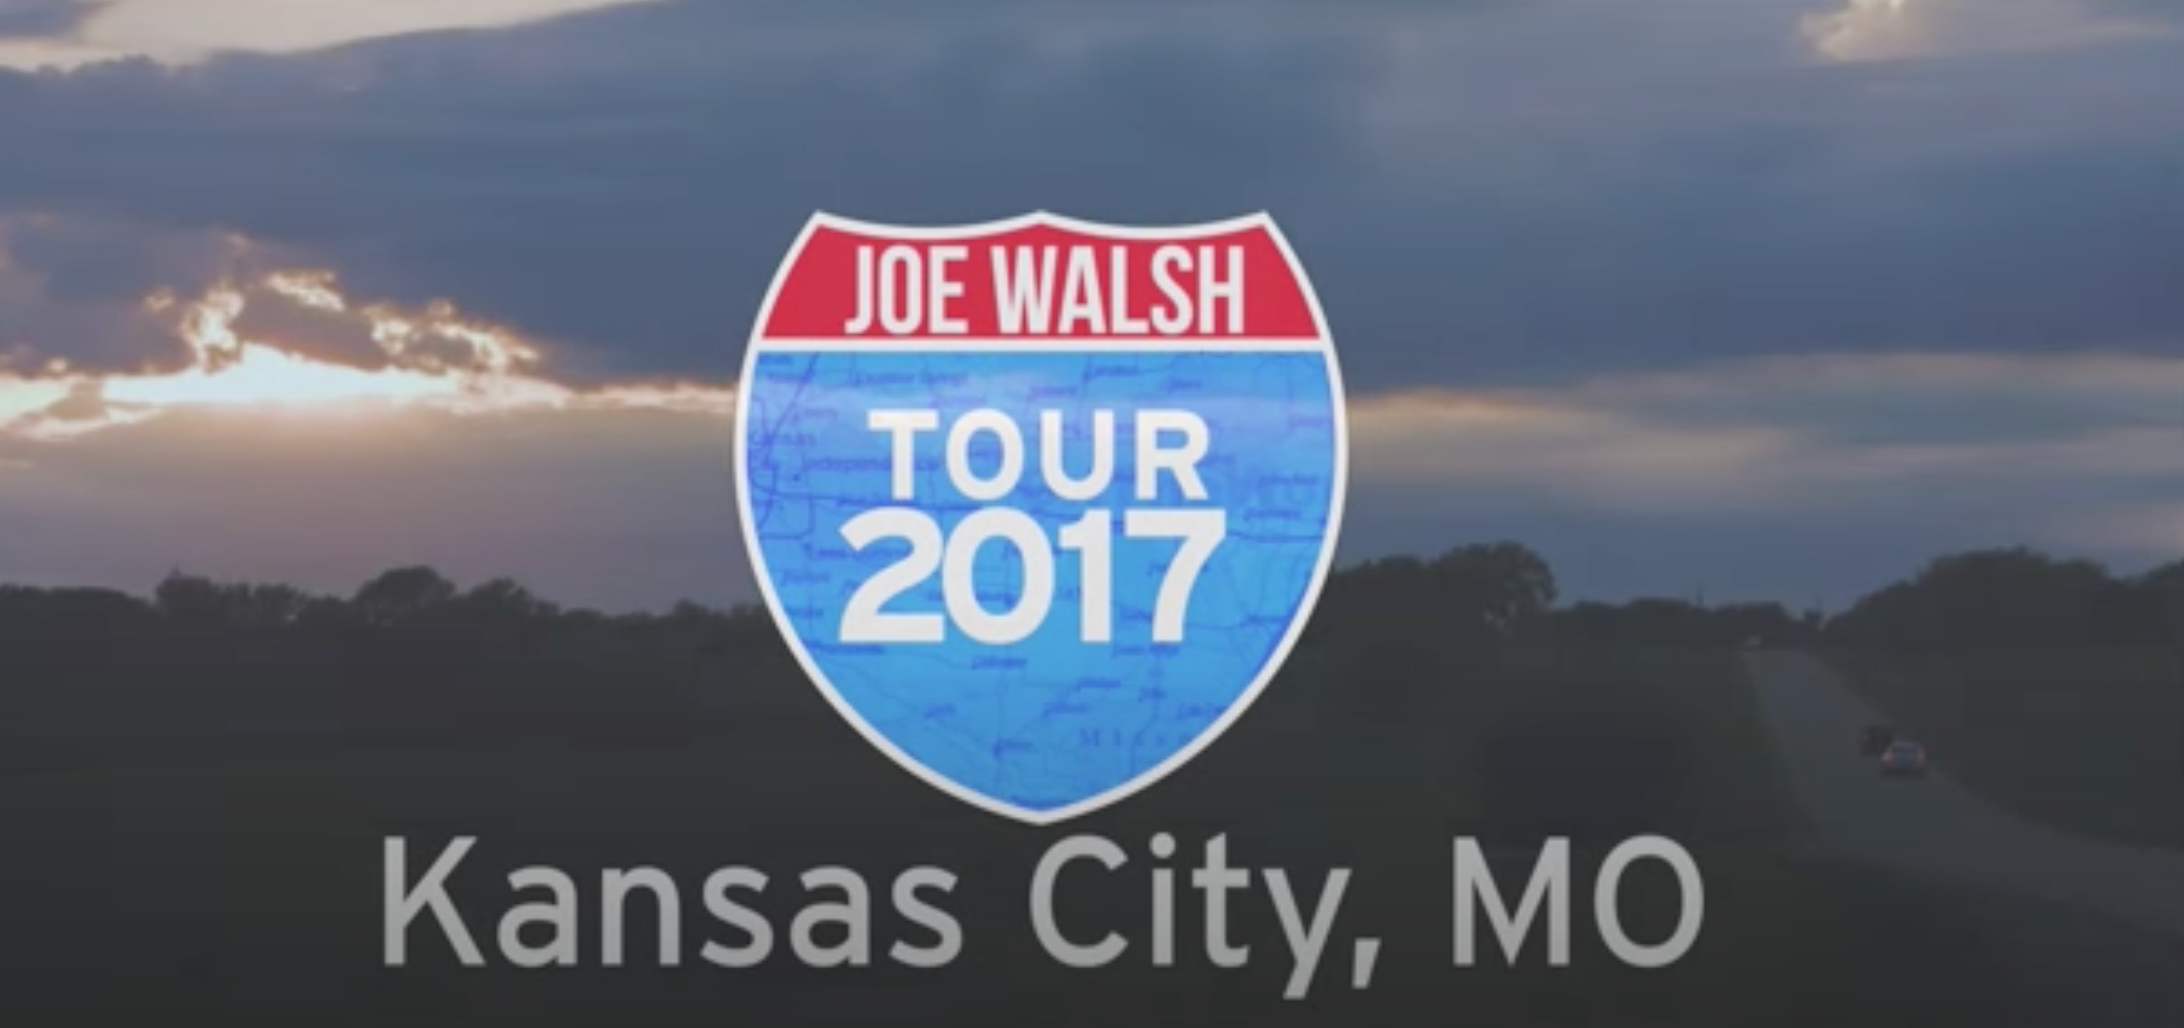 Load video: oe Walsh Tour 2017 Kansas City, MO Wrap Up